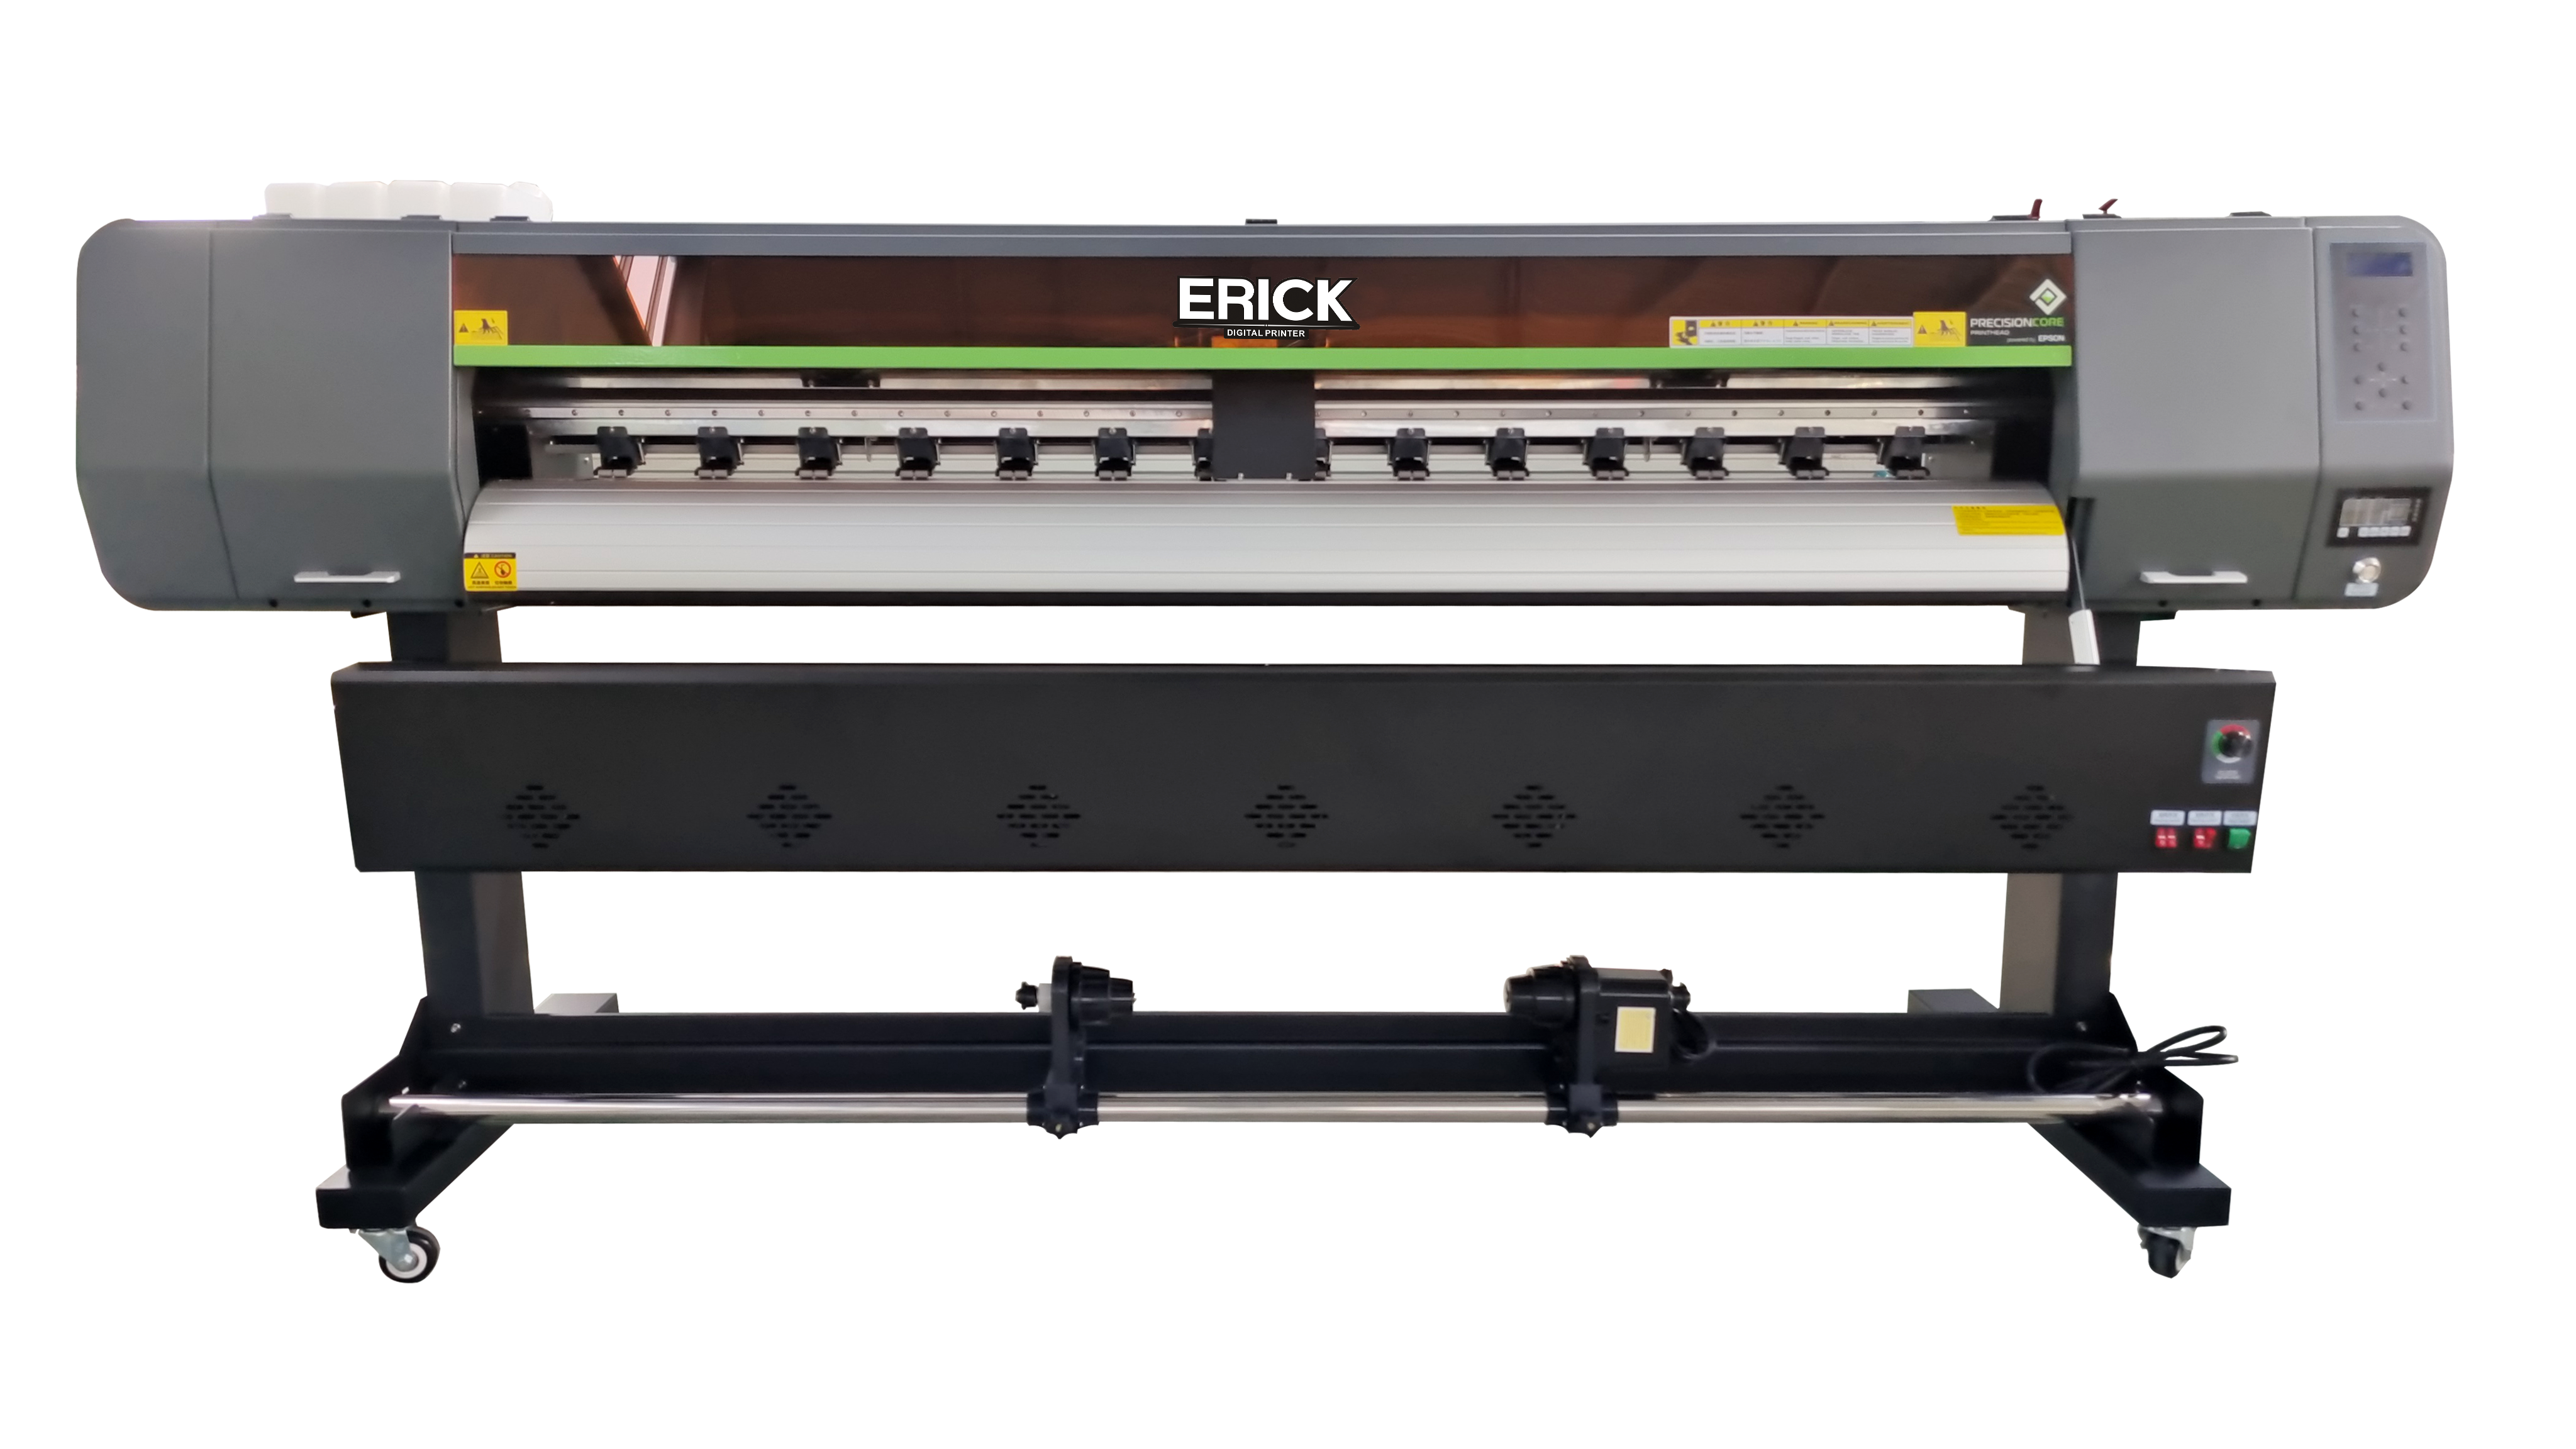 Erick 1801 met 1 stuks EP-I3200-A1/E1 printkoppen